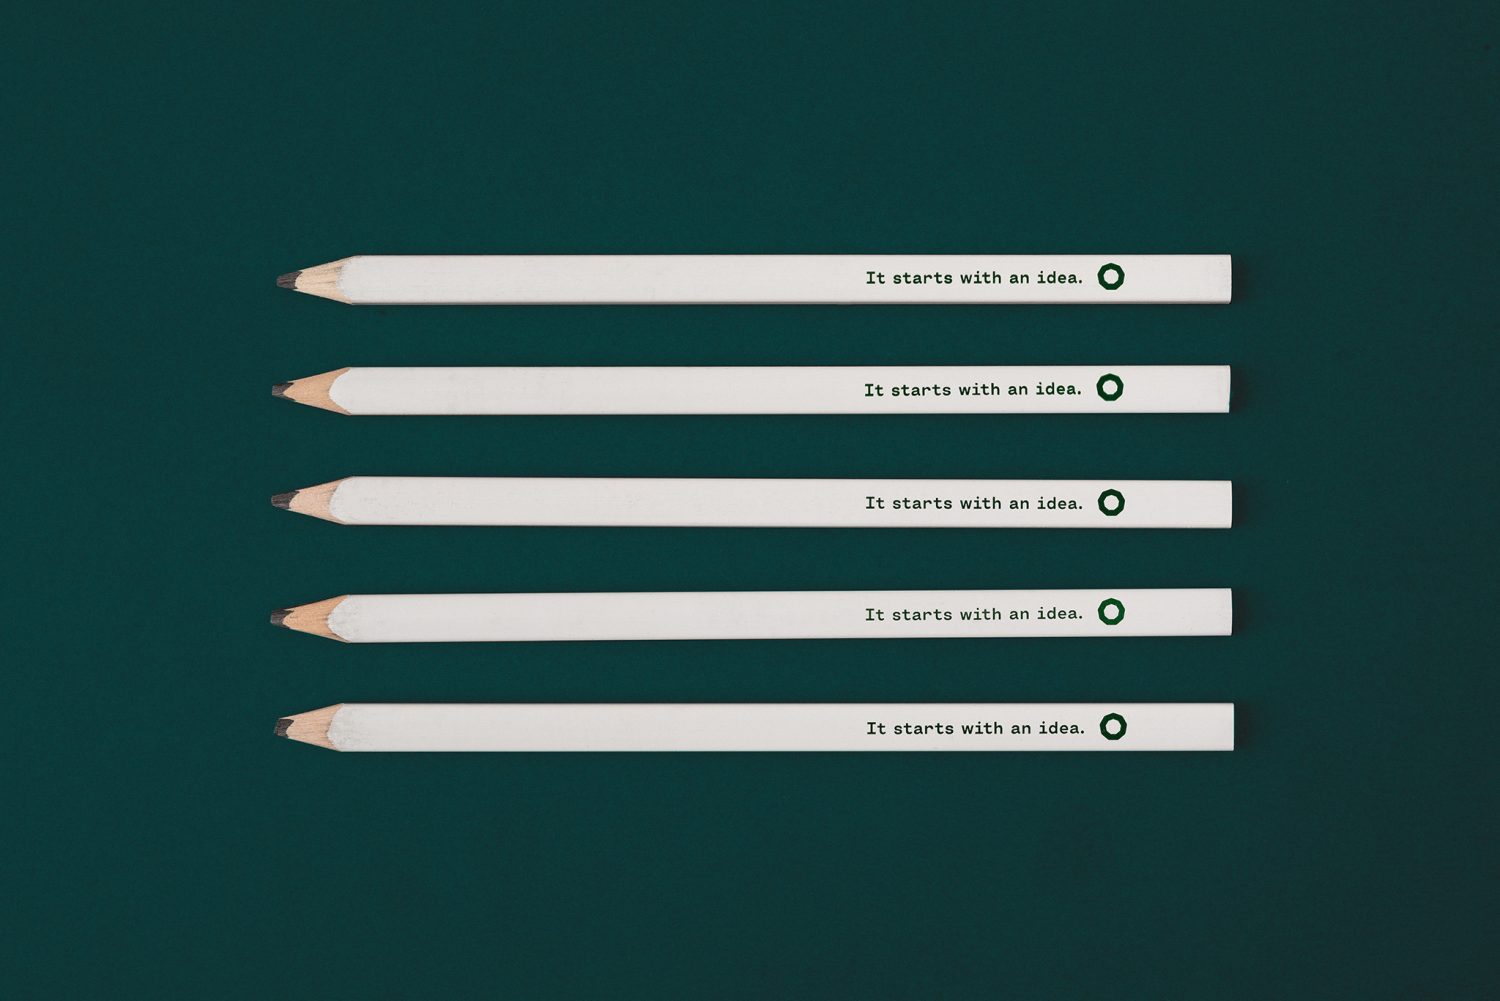 Branded pencils designed by Werklig for professional banking tool Holvi